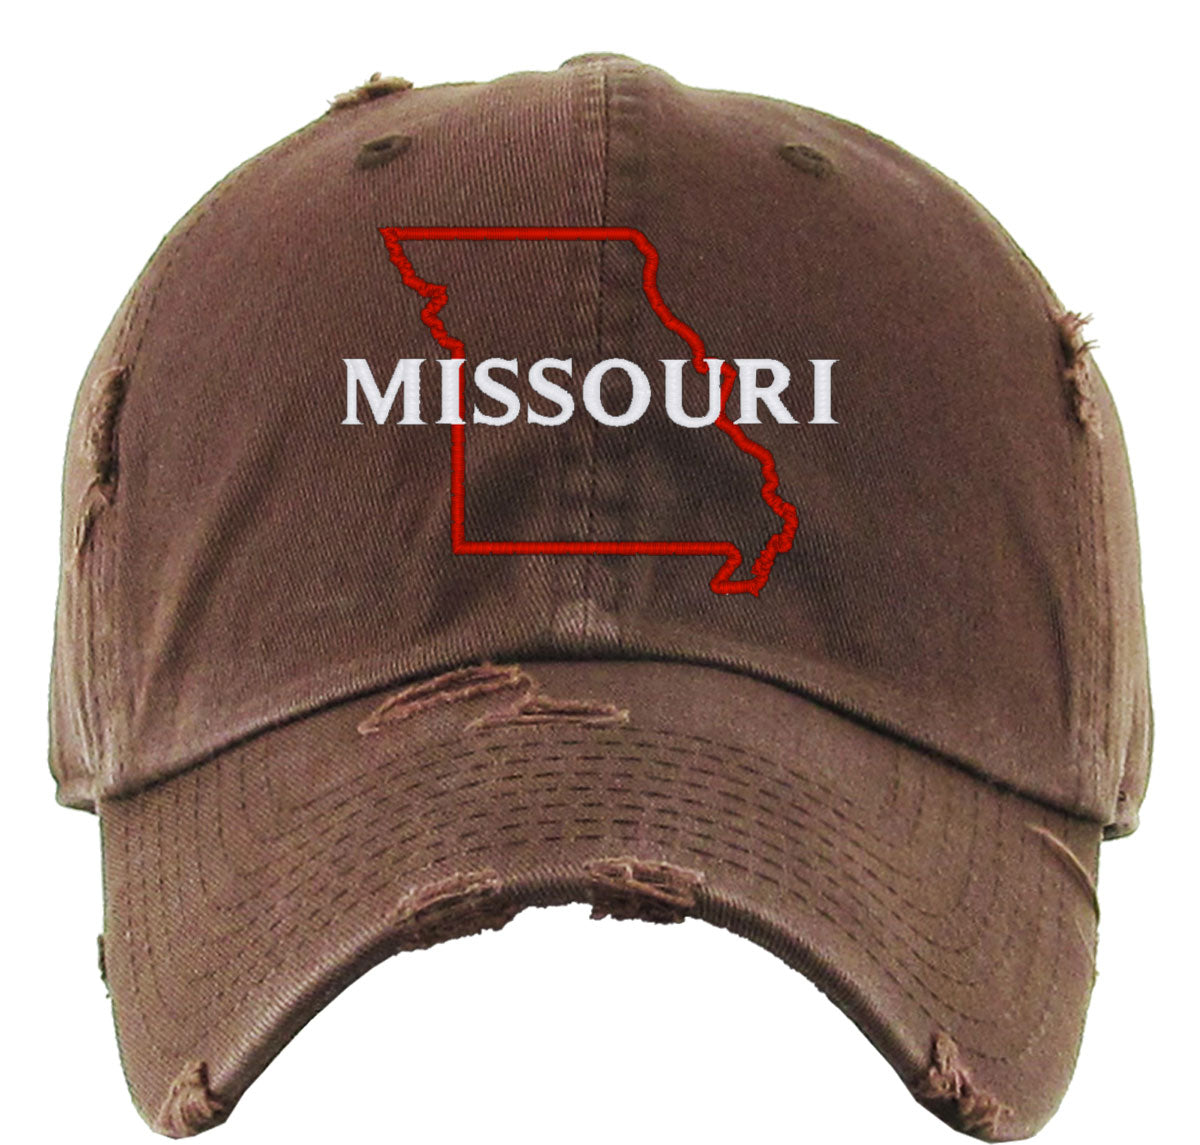 Missouri Vintage Baseball Cap